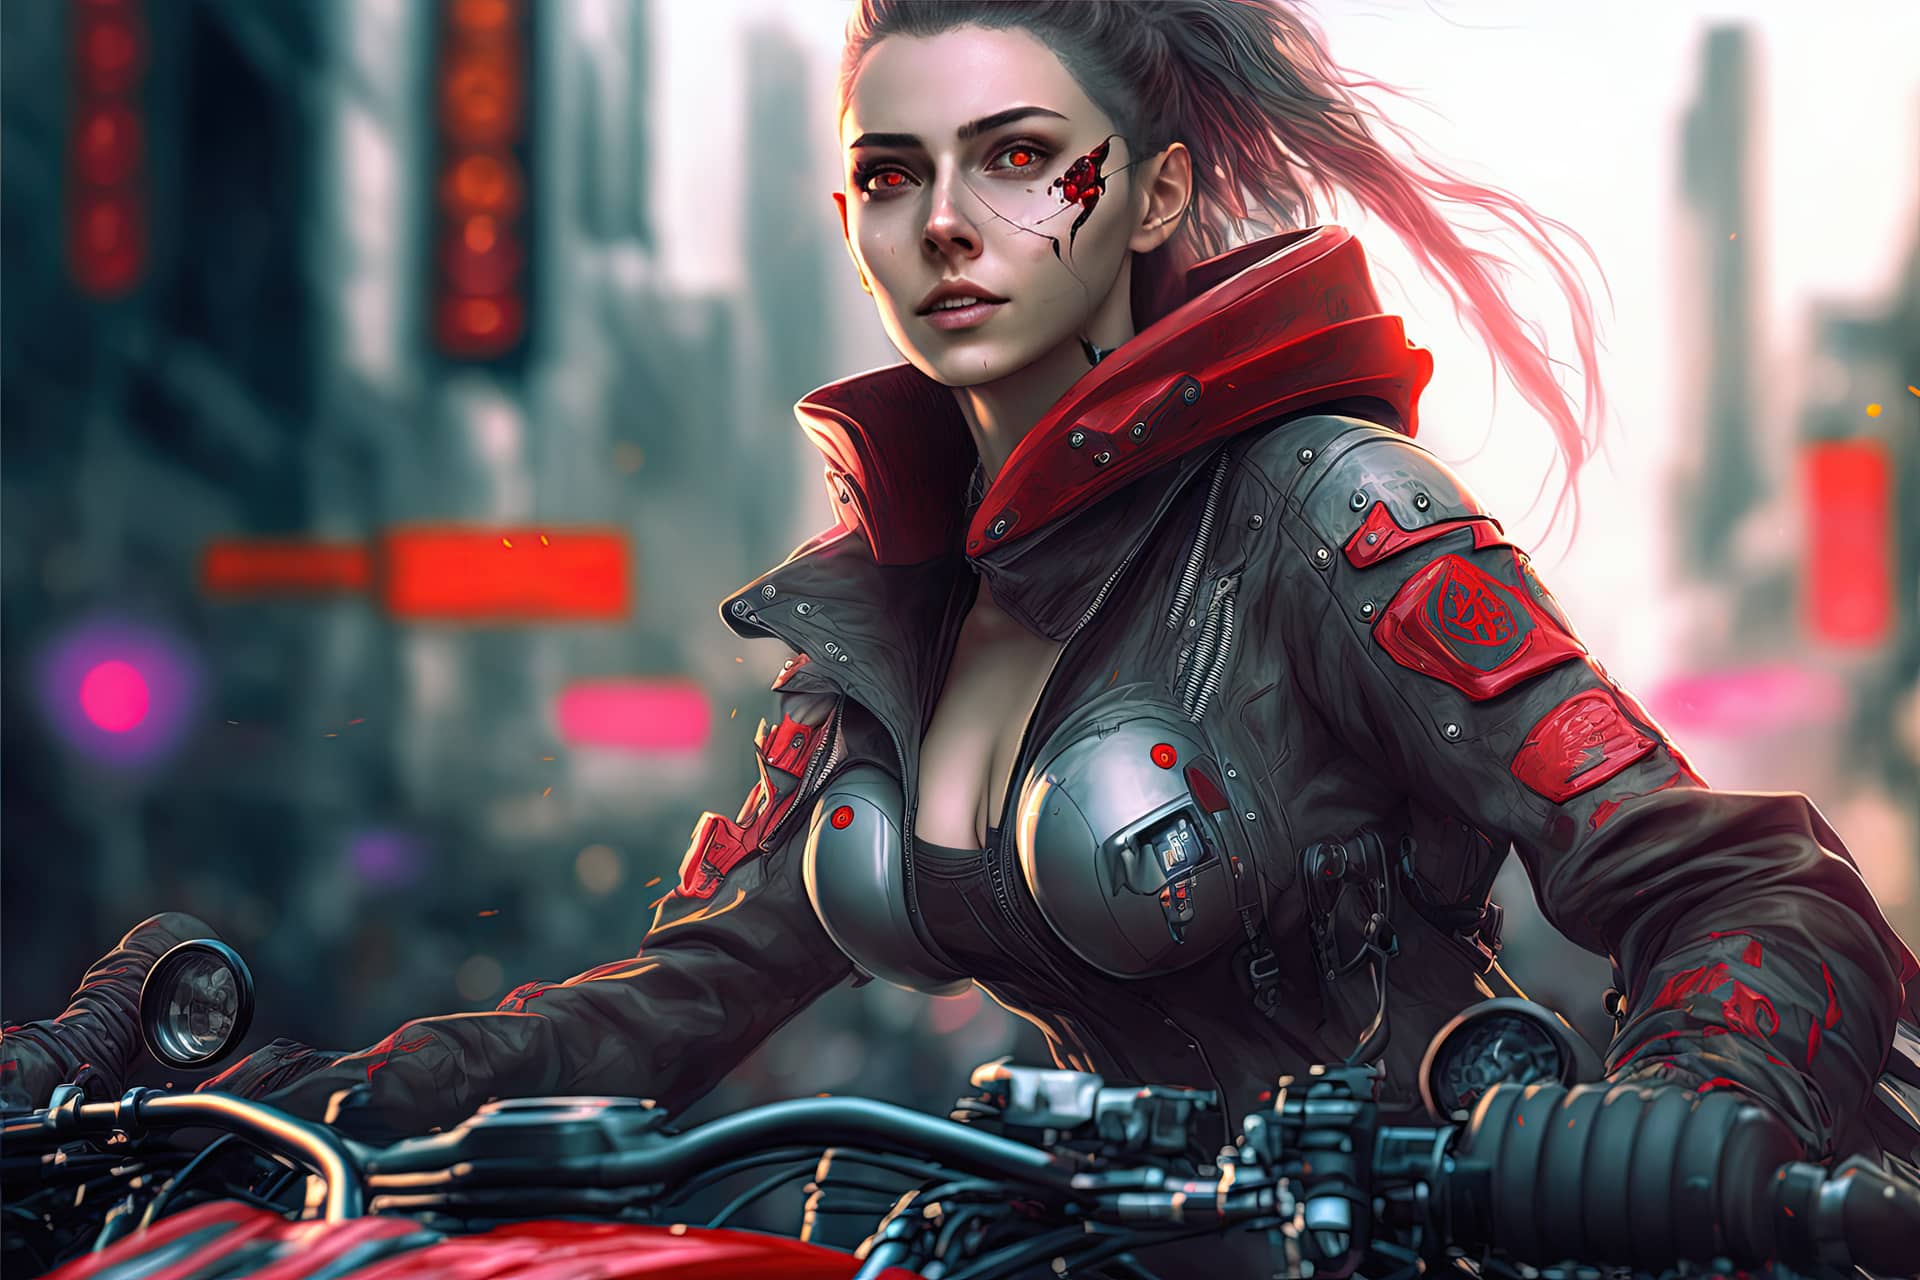 Beautiful cyberpunk girl riding futuristic motorbike futuristic city